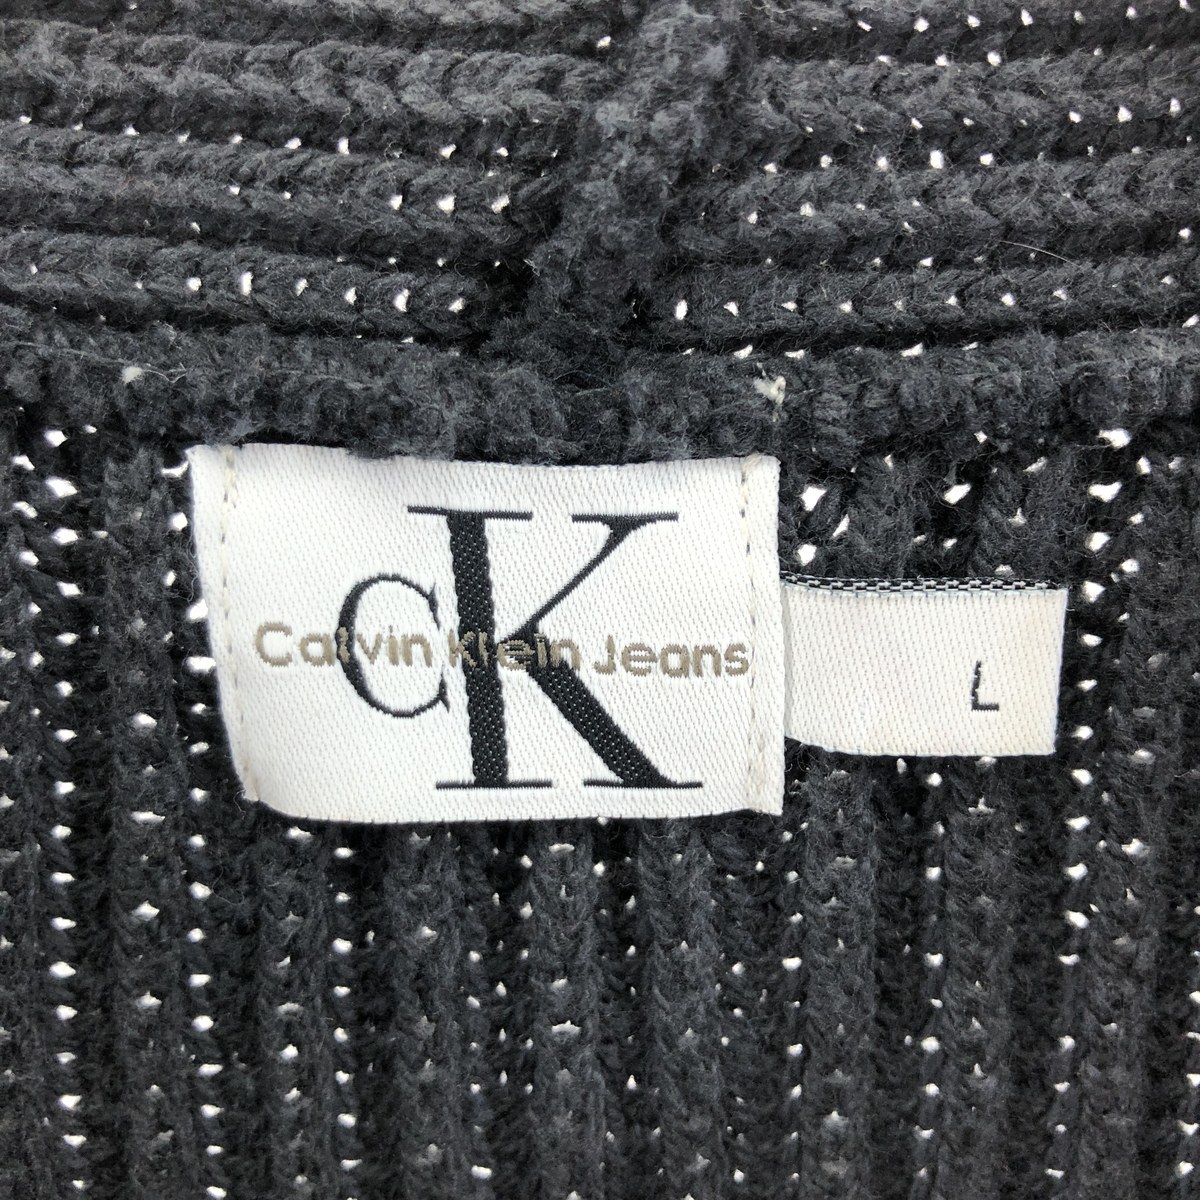  б/у одежда 90 годы Calvin Klein Calvin klein JEANS ребристый mok шея хлопок вязаный свитер USA производства мужской XL /eaa378154